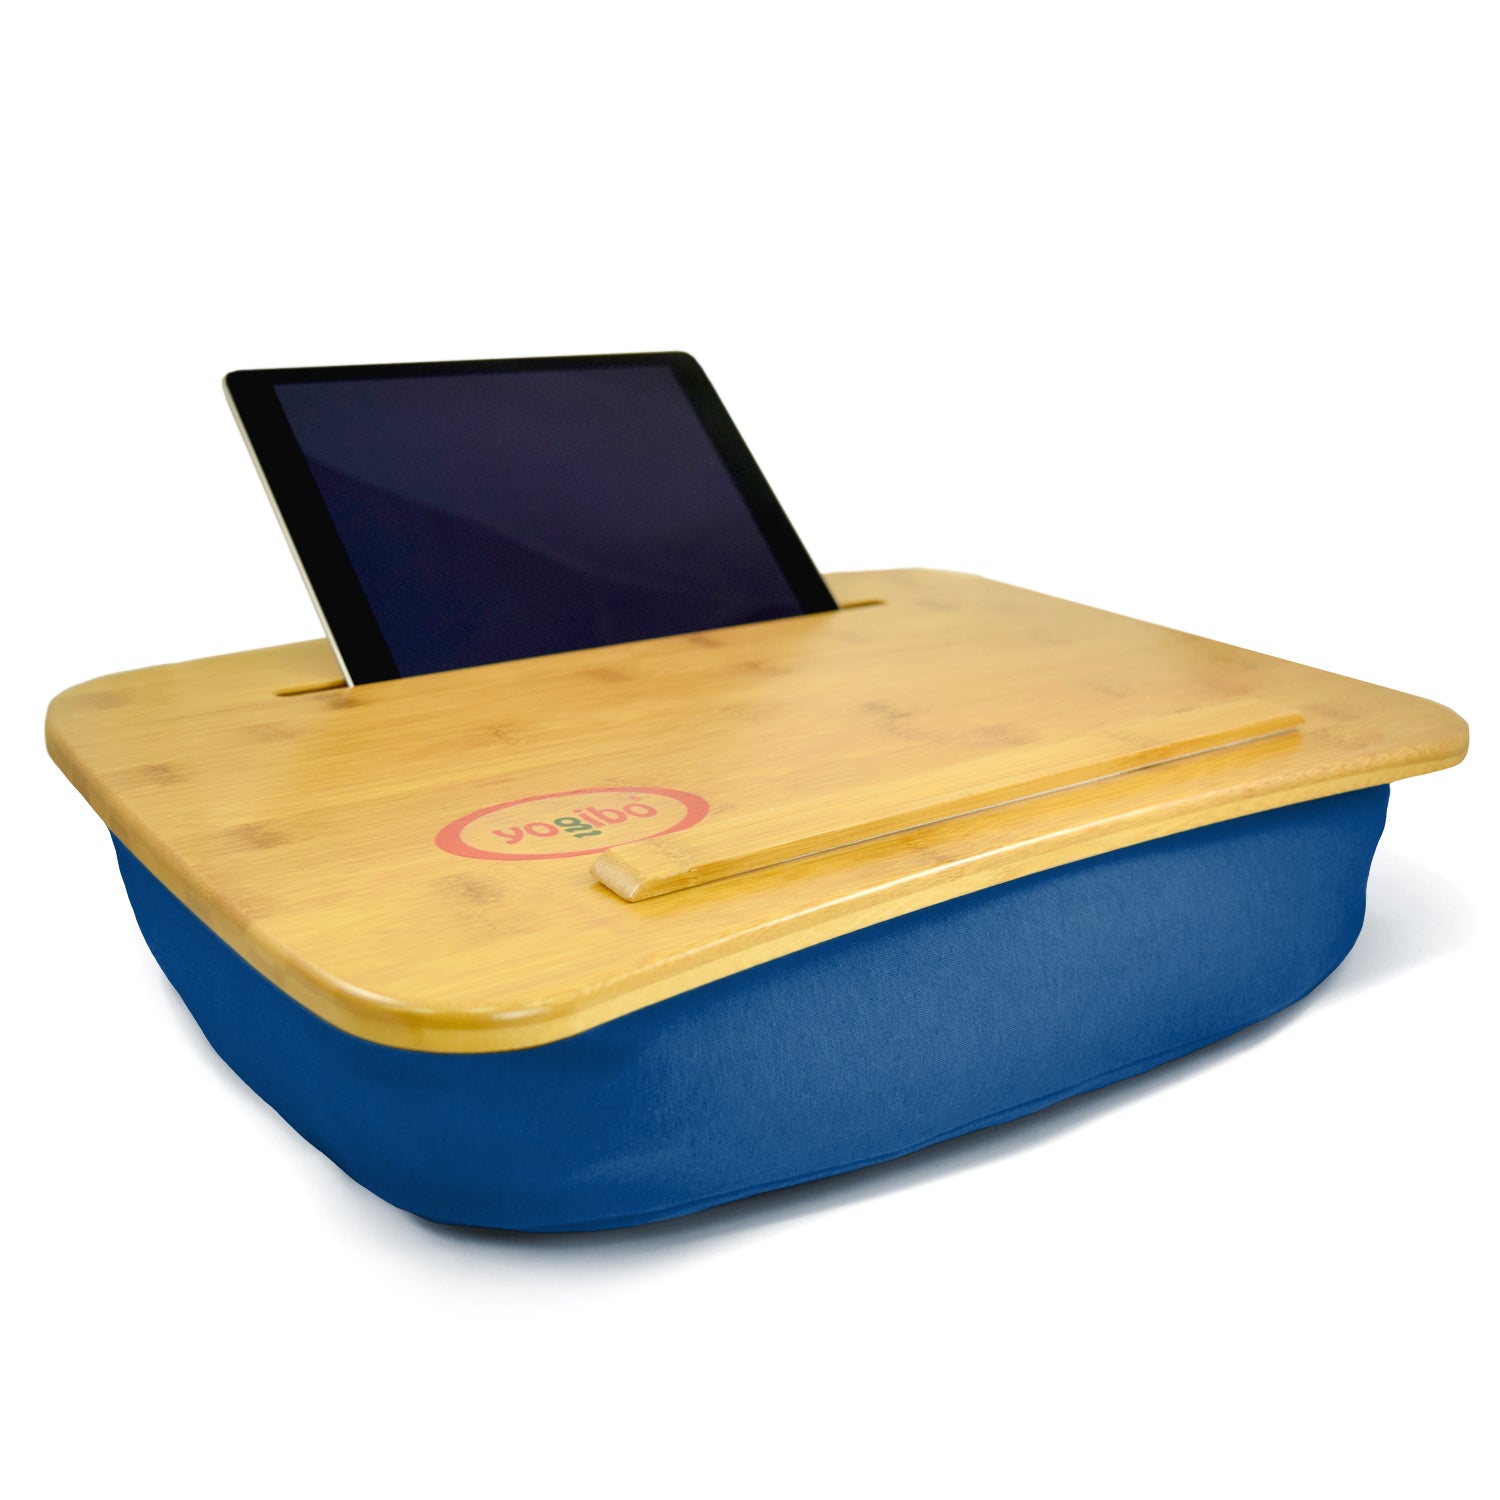 Traybo: A Multipurpose Ergonomic Laptop Lap Desk - Yogibo®